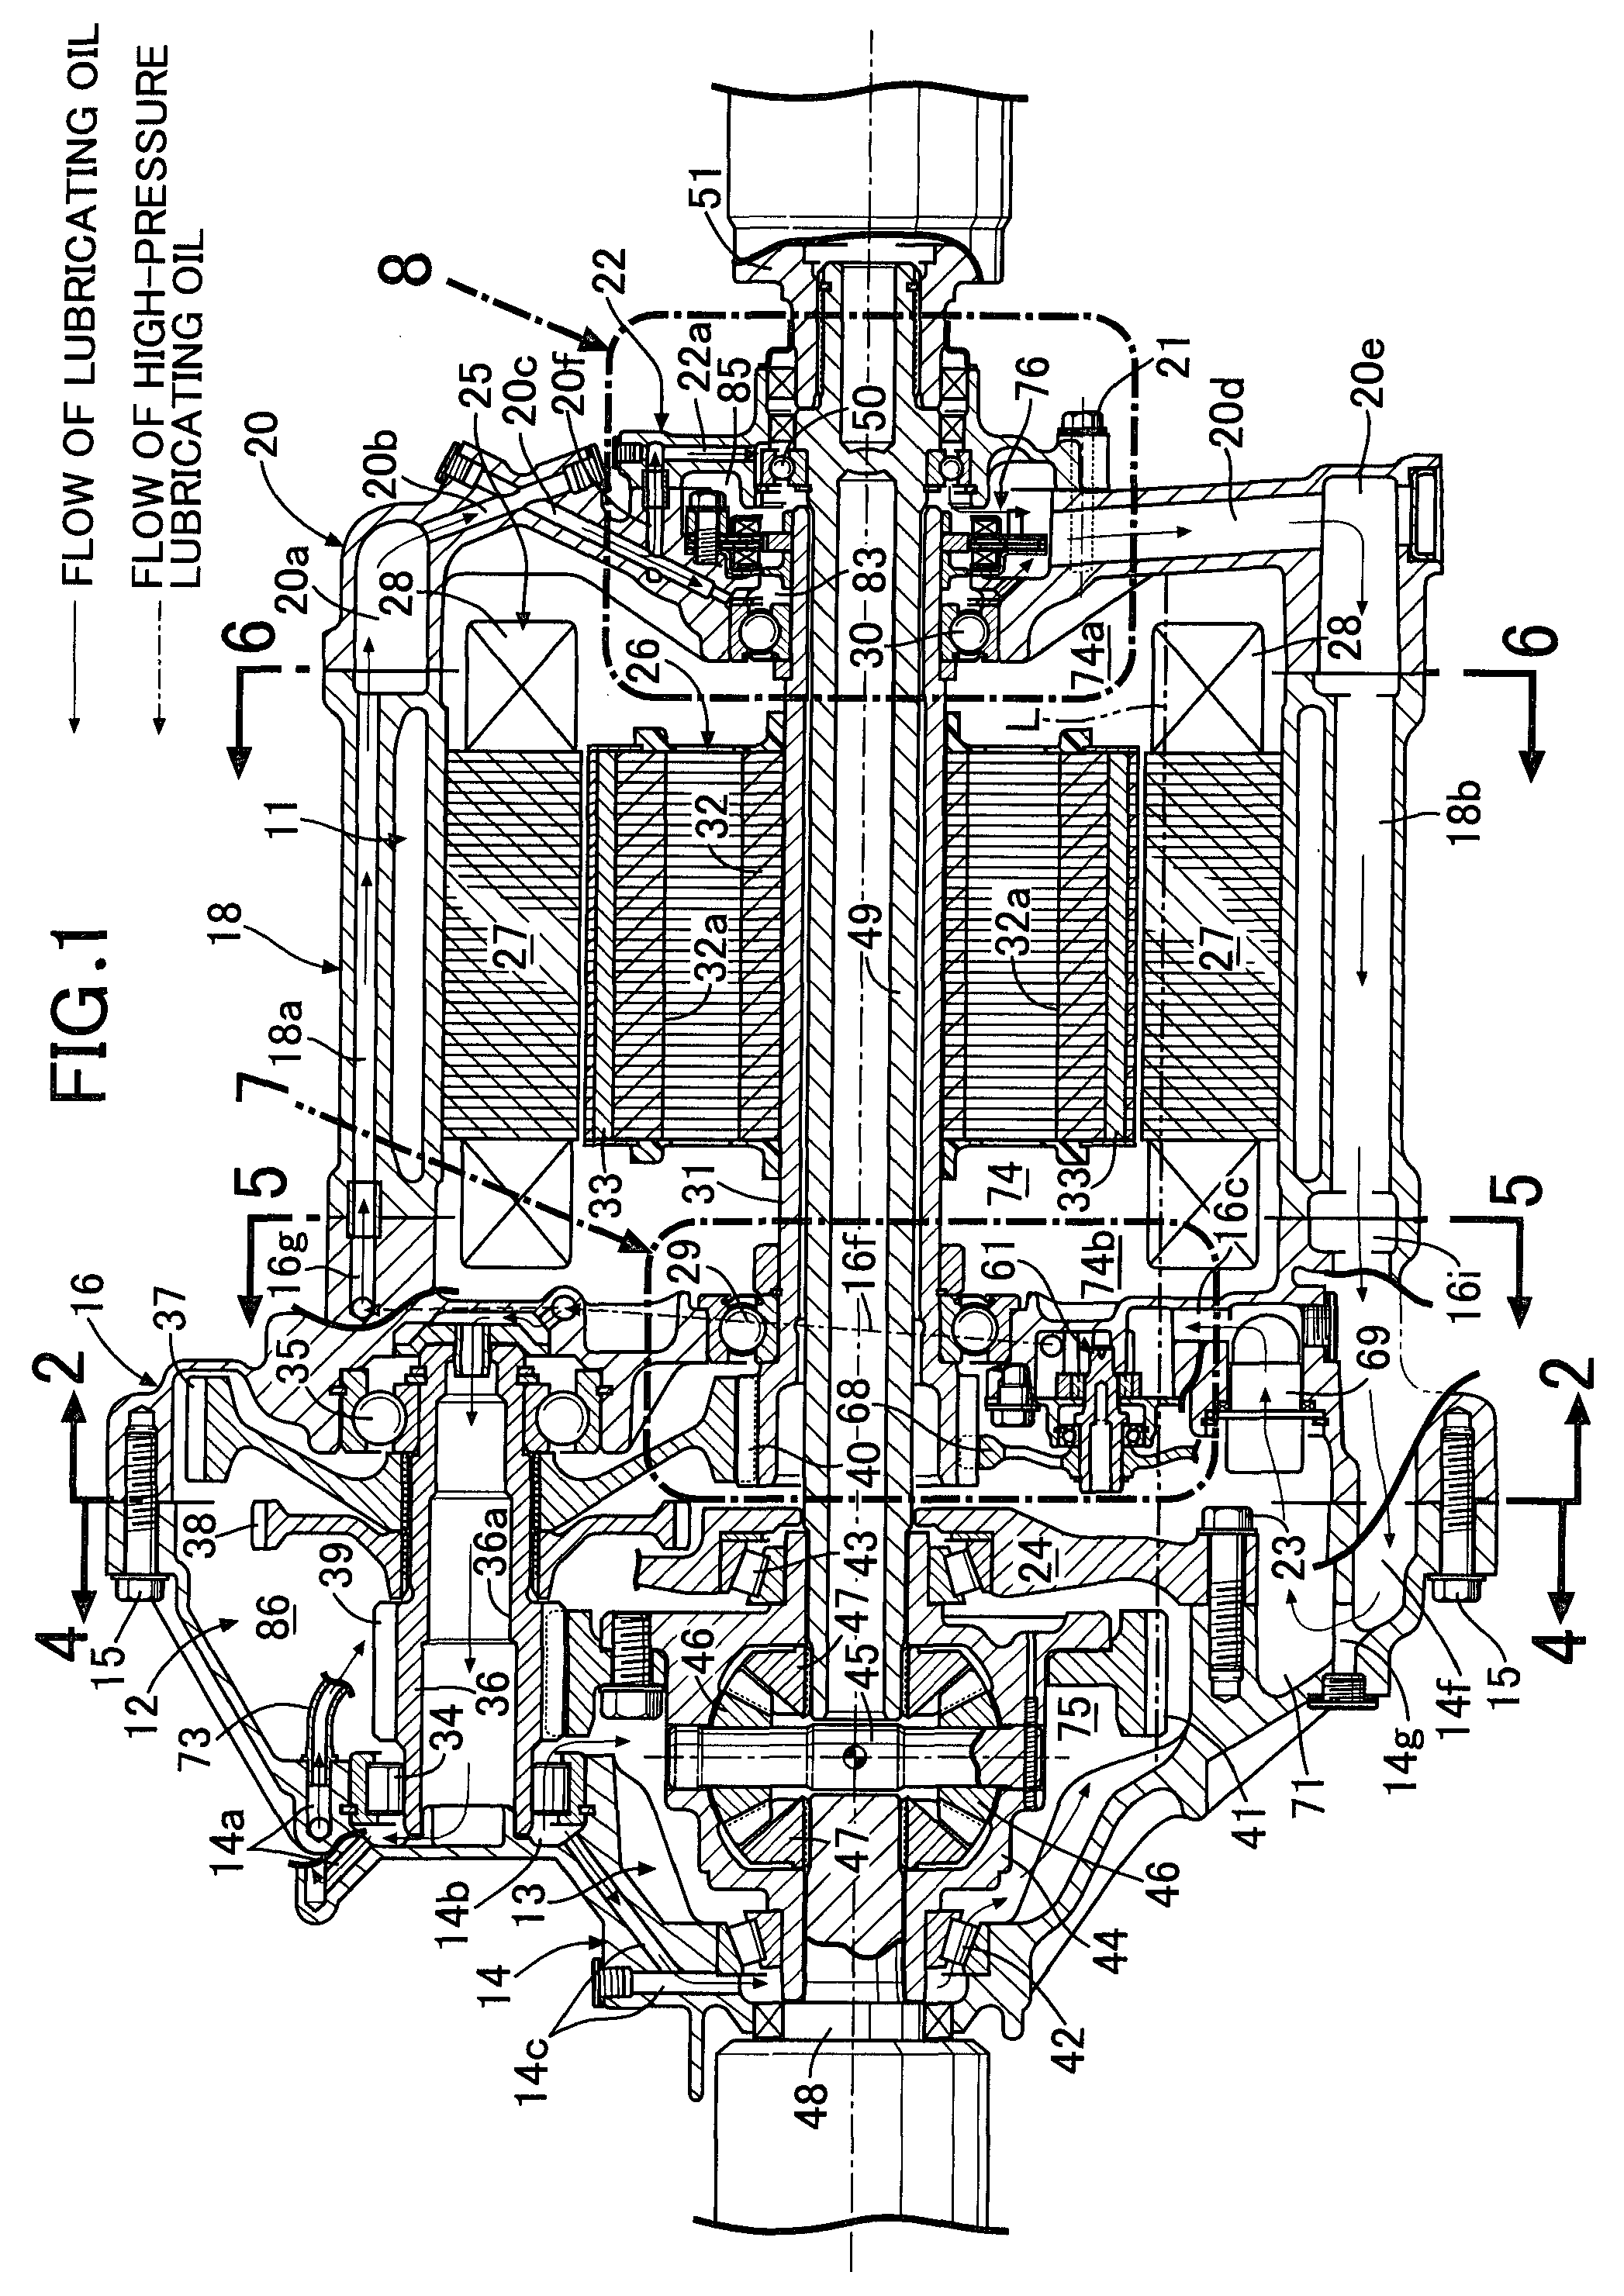 Motor-type power device